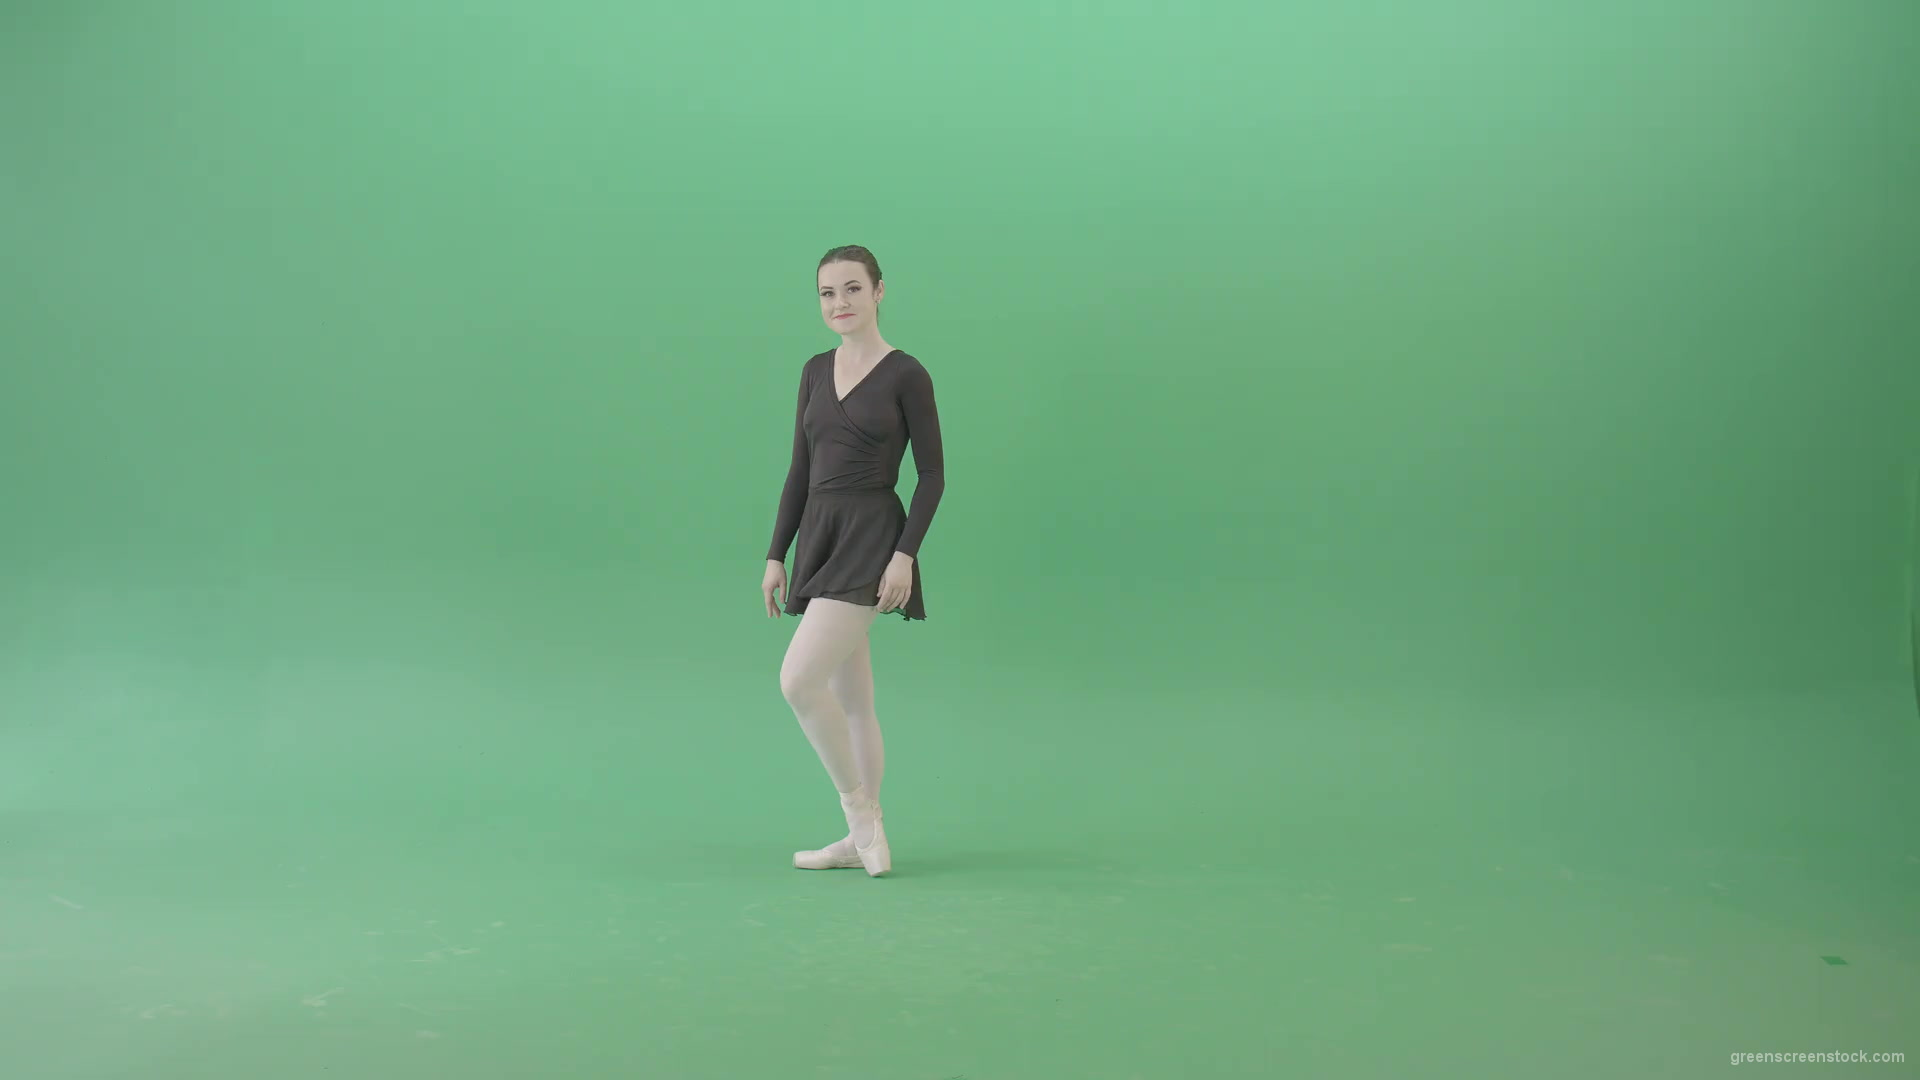 Russian-ballet-dancing-girl-in-black-body-wear-dress-dancing-isolated-on-green-screen-4K-Video-Footage-1920_001 Green Screen Stock